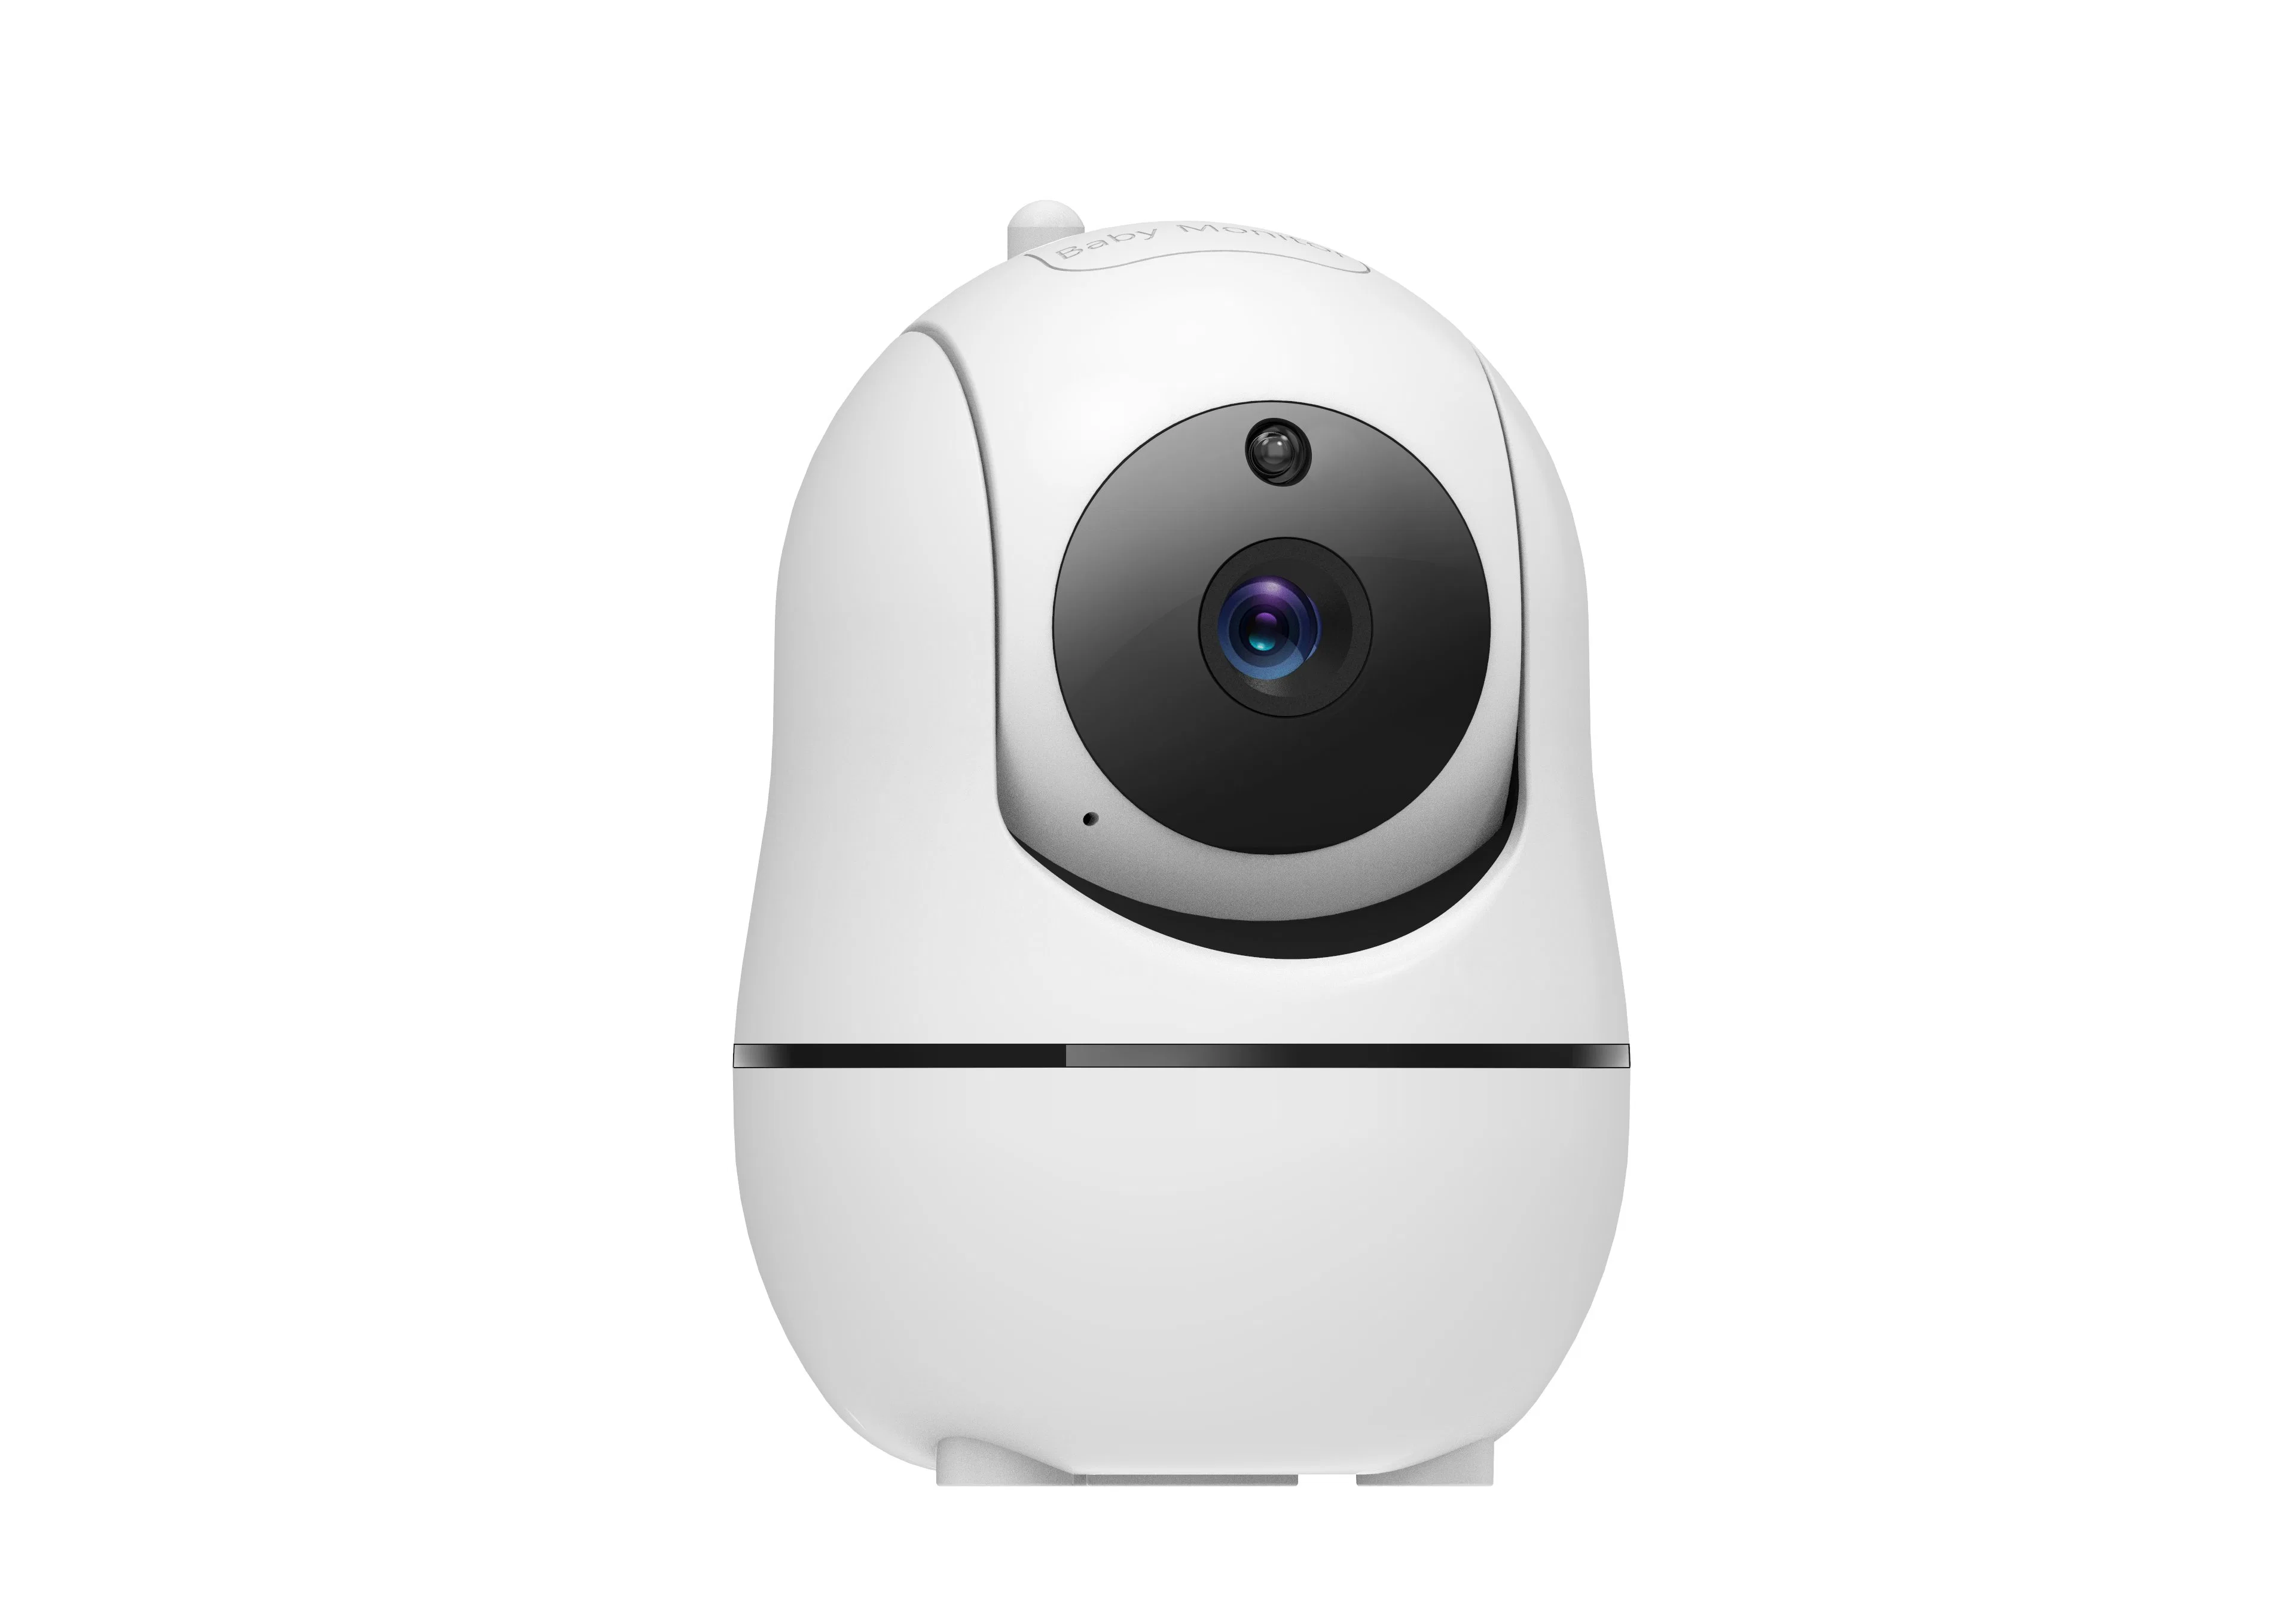 1080p Home Security Wireless WiFi Hidden Drone Camera Motion Tracking (تتبع حركة كاميرا Drone المخفية عبر شبكة WiFi الرؤية الليلية